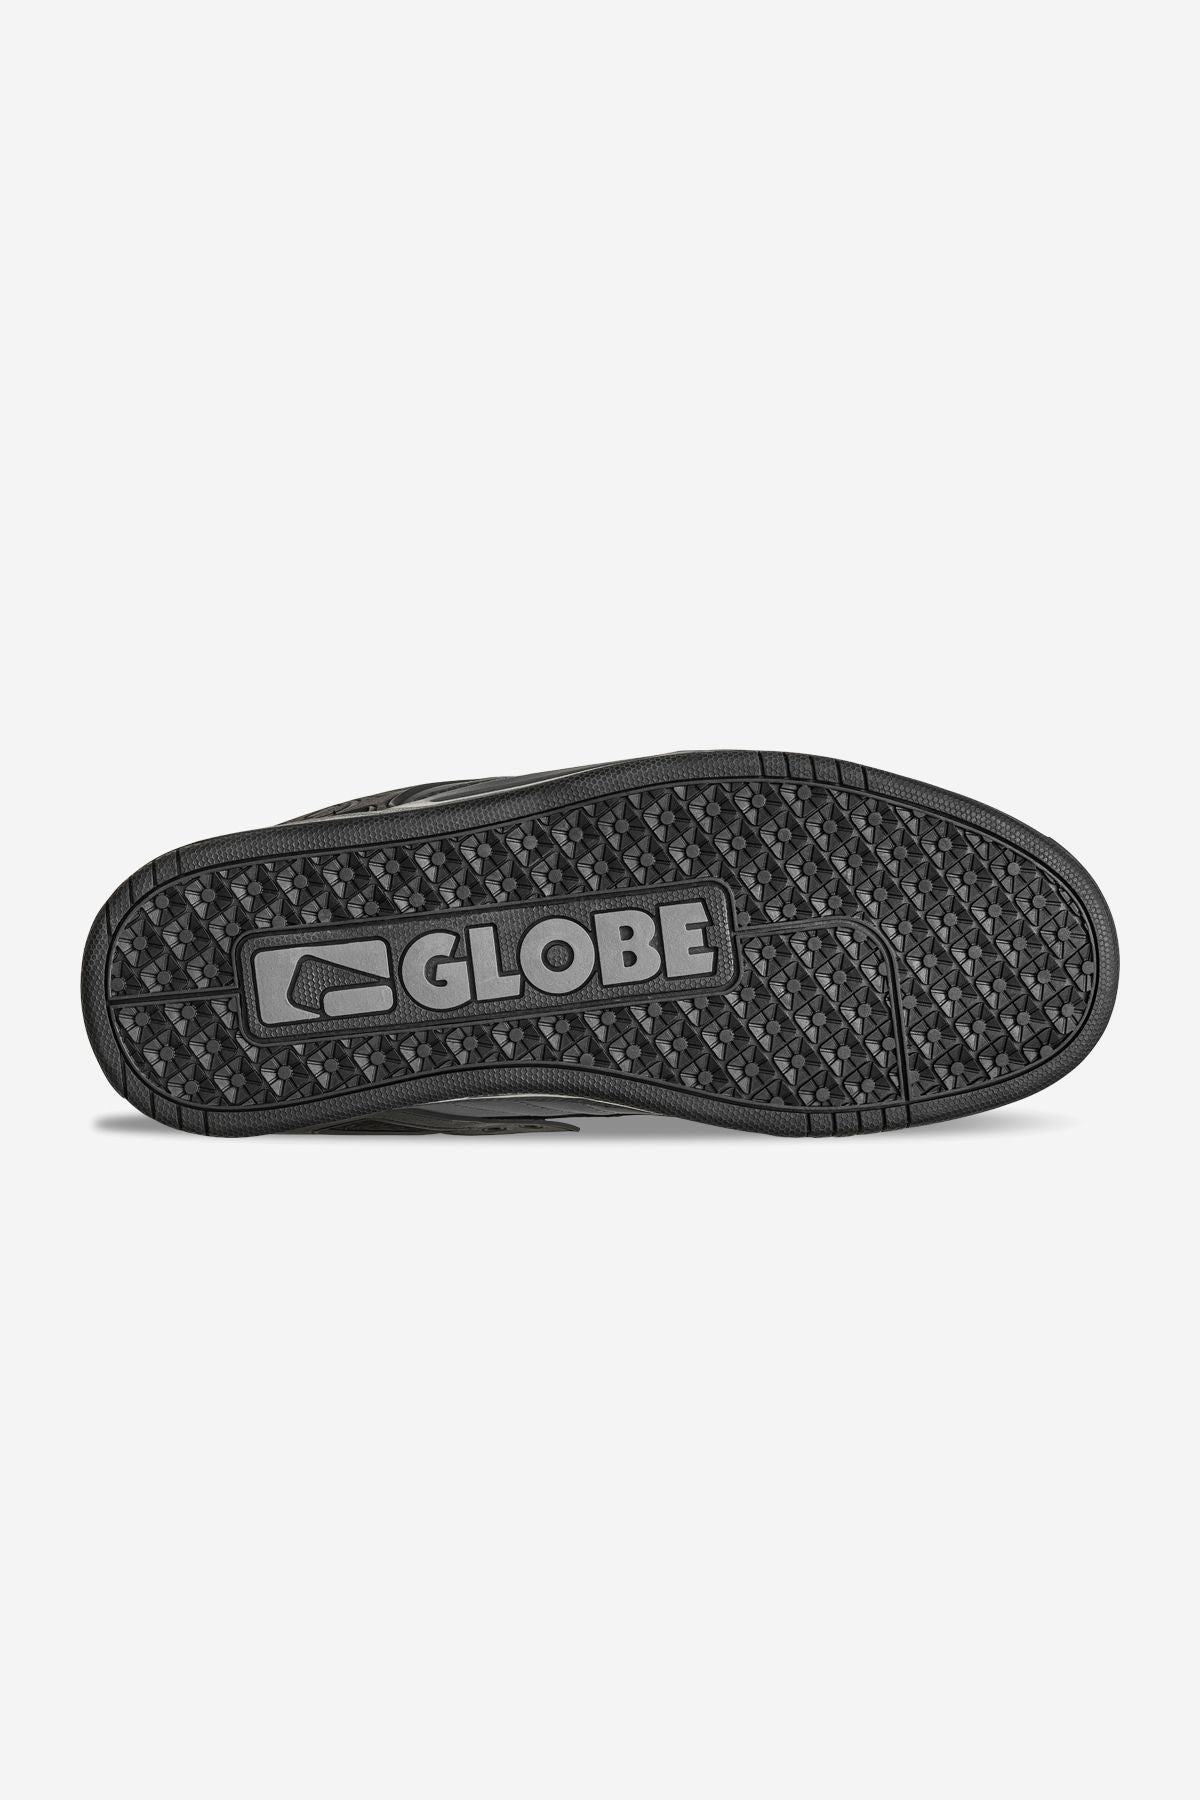 Globe - Tilt - Dark Shadow/Phantom - skateboard Chaussures